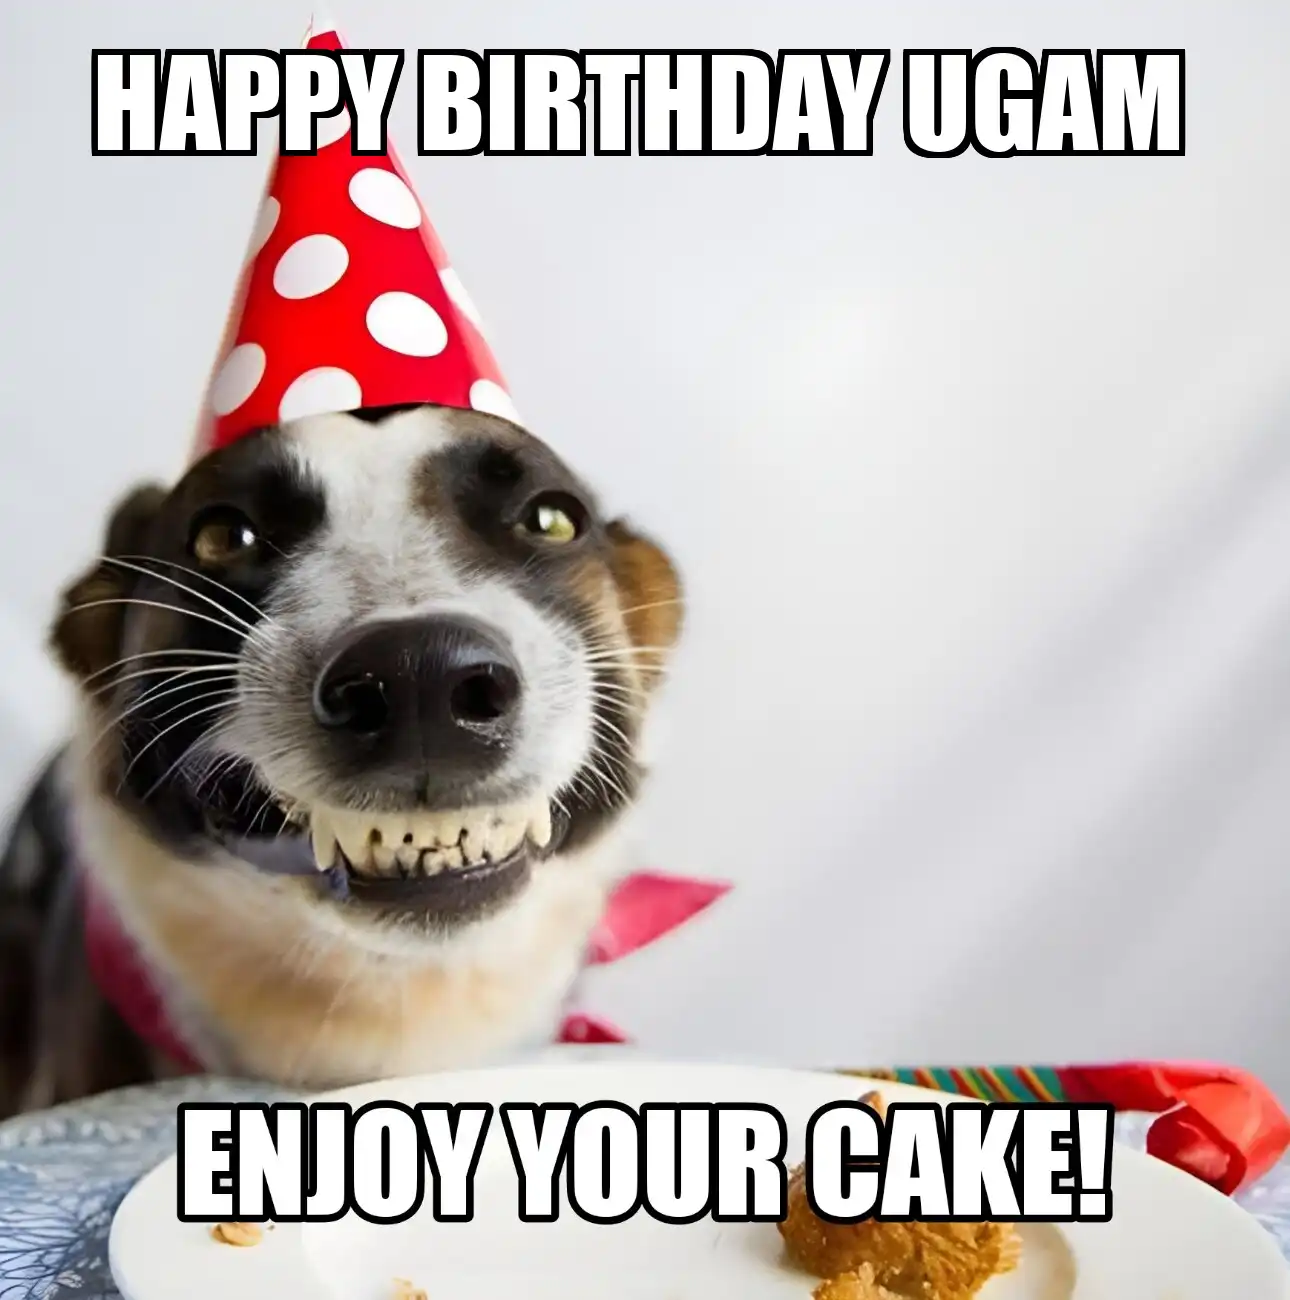 Happy Birthday Ugam Enjoy Your Cake Dog Meme